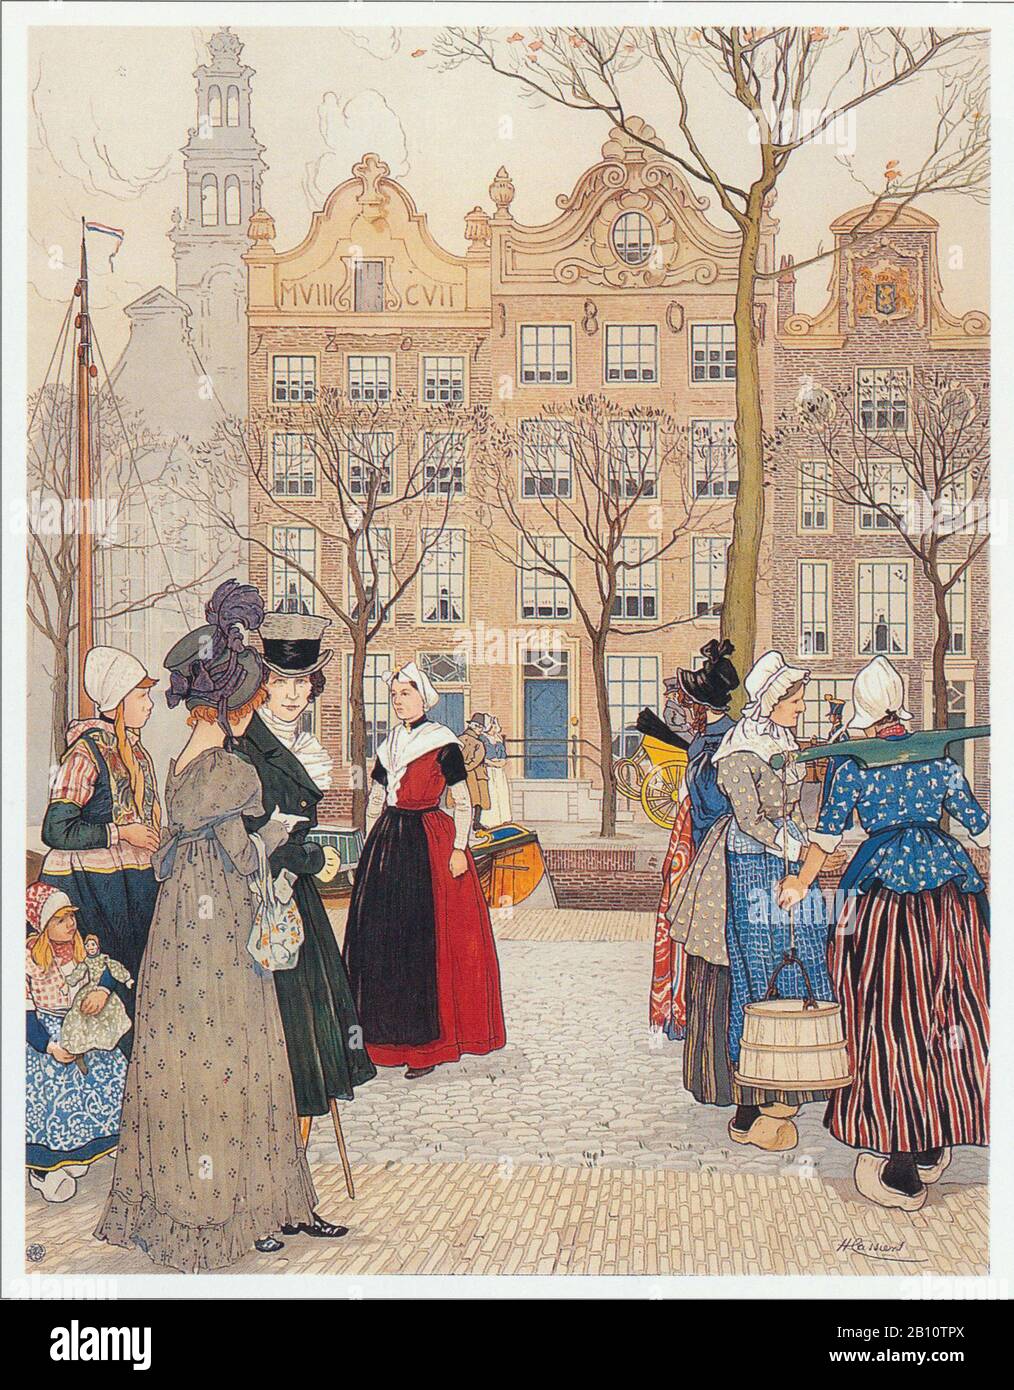 Amsterdam jordaan - Illustration by Henri Cassiers (1858 - 1944) Stock Photo